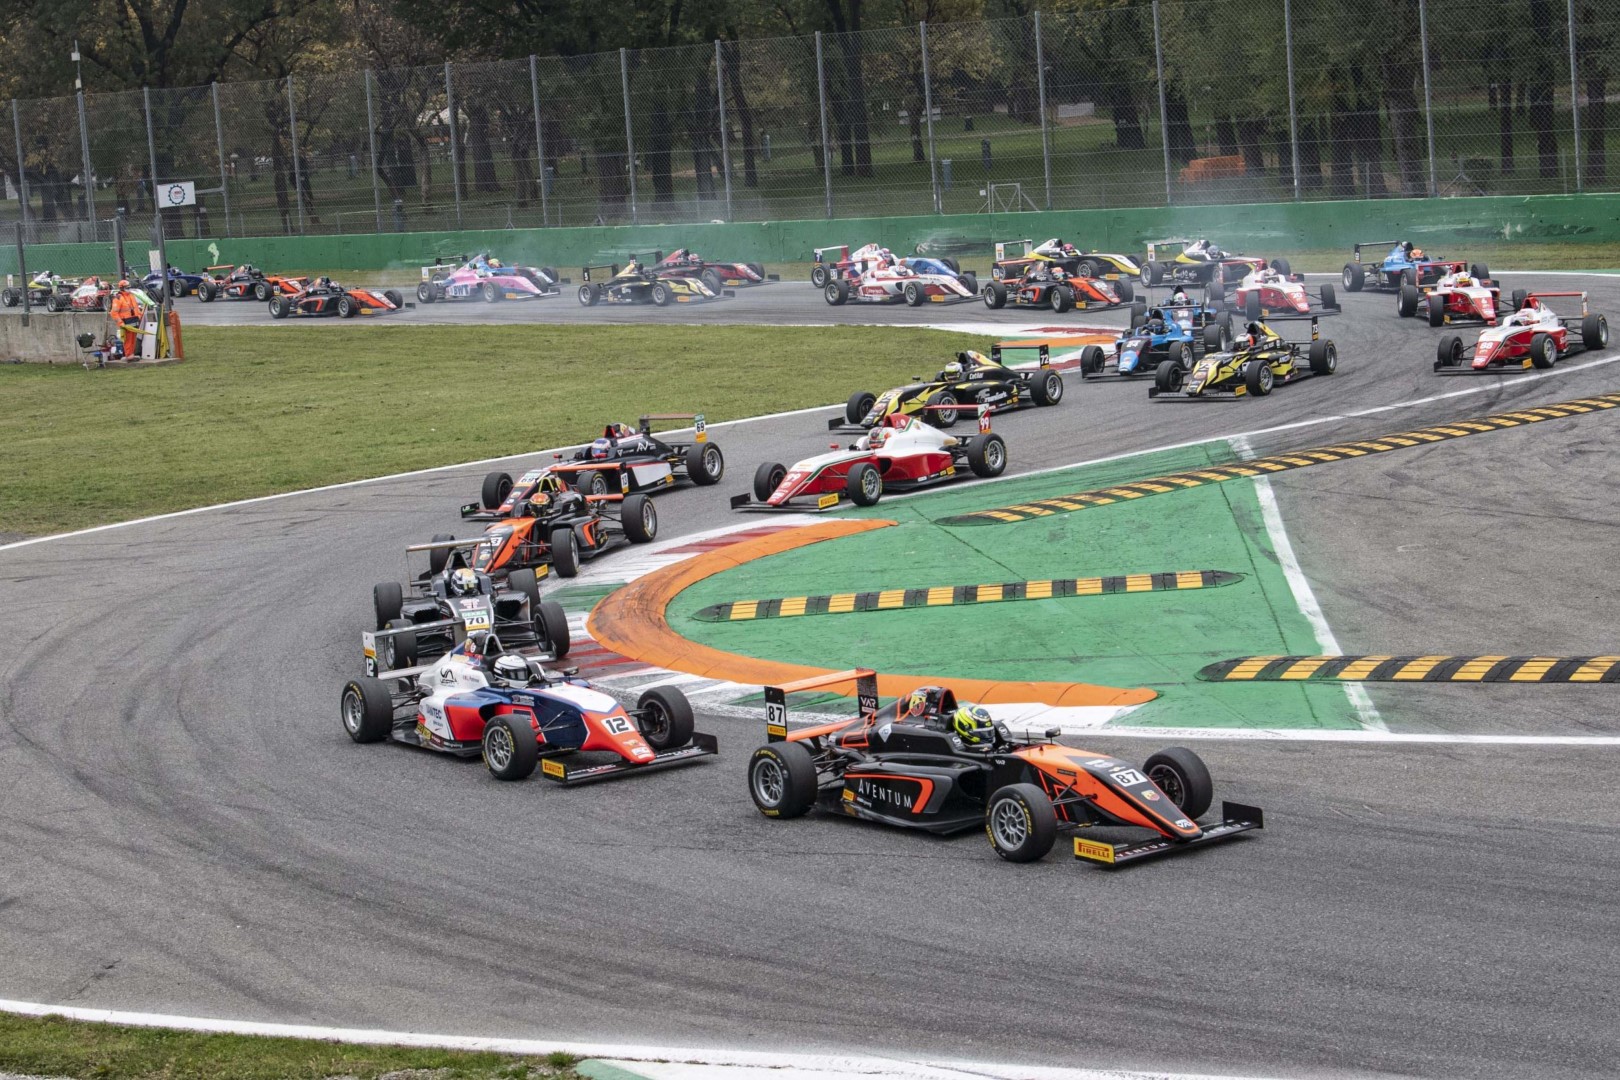 Mistrzostwa F4 powered by Abarth (Monza)